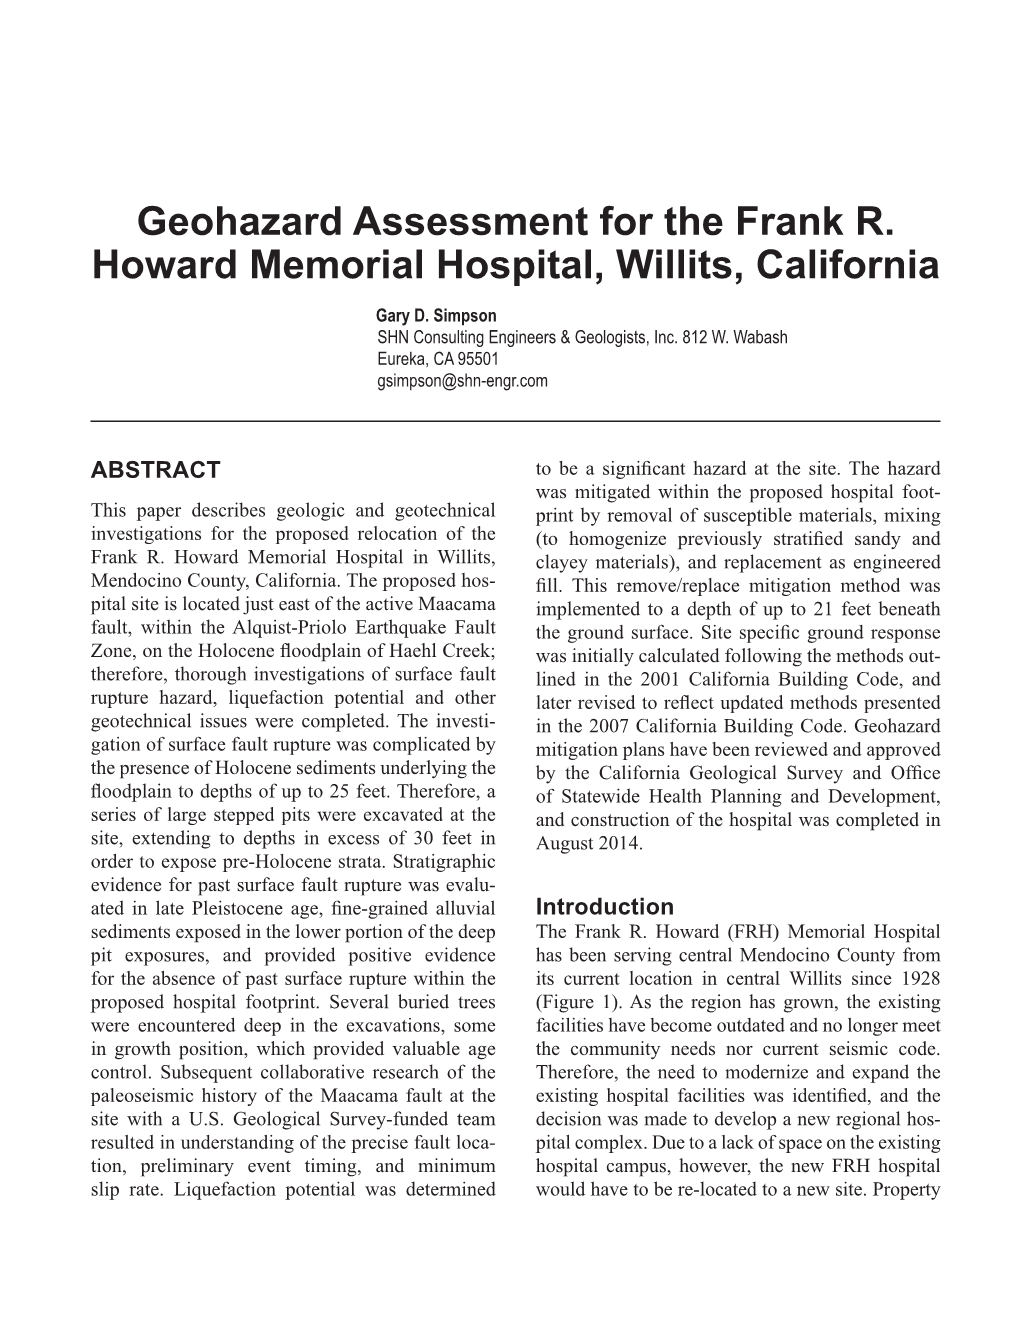 Geohazard Assessment for the Frank R. Howard Memorial Hospital, Willits, California Gary D